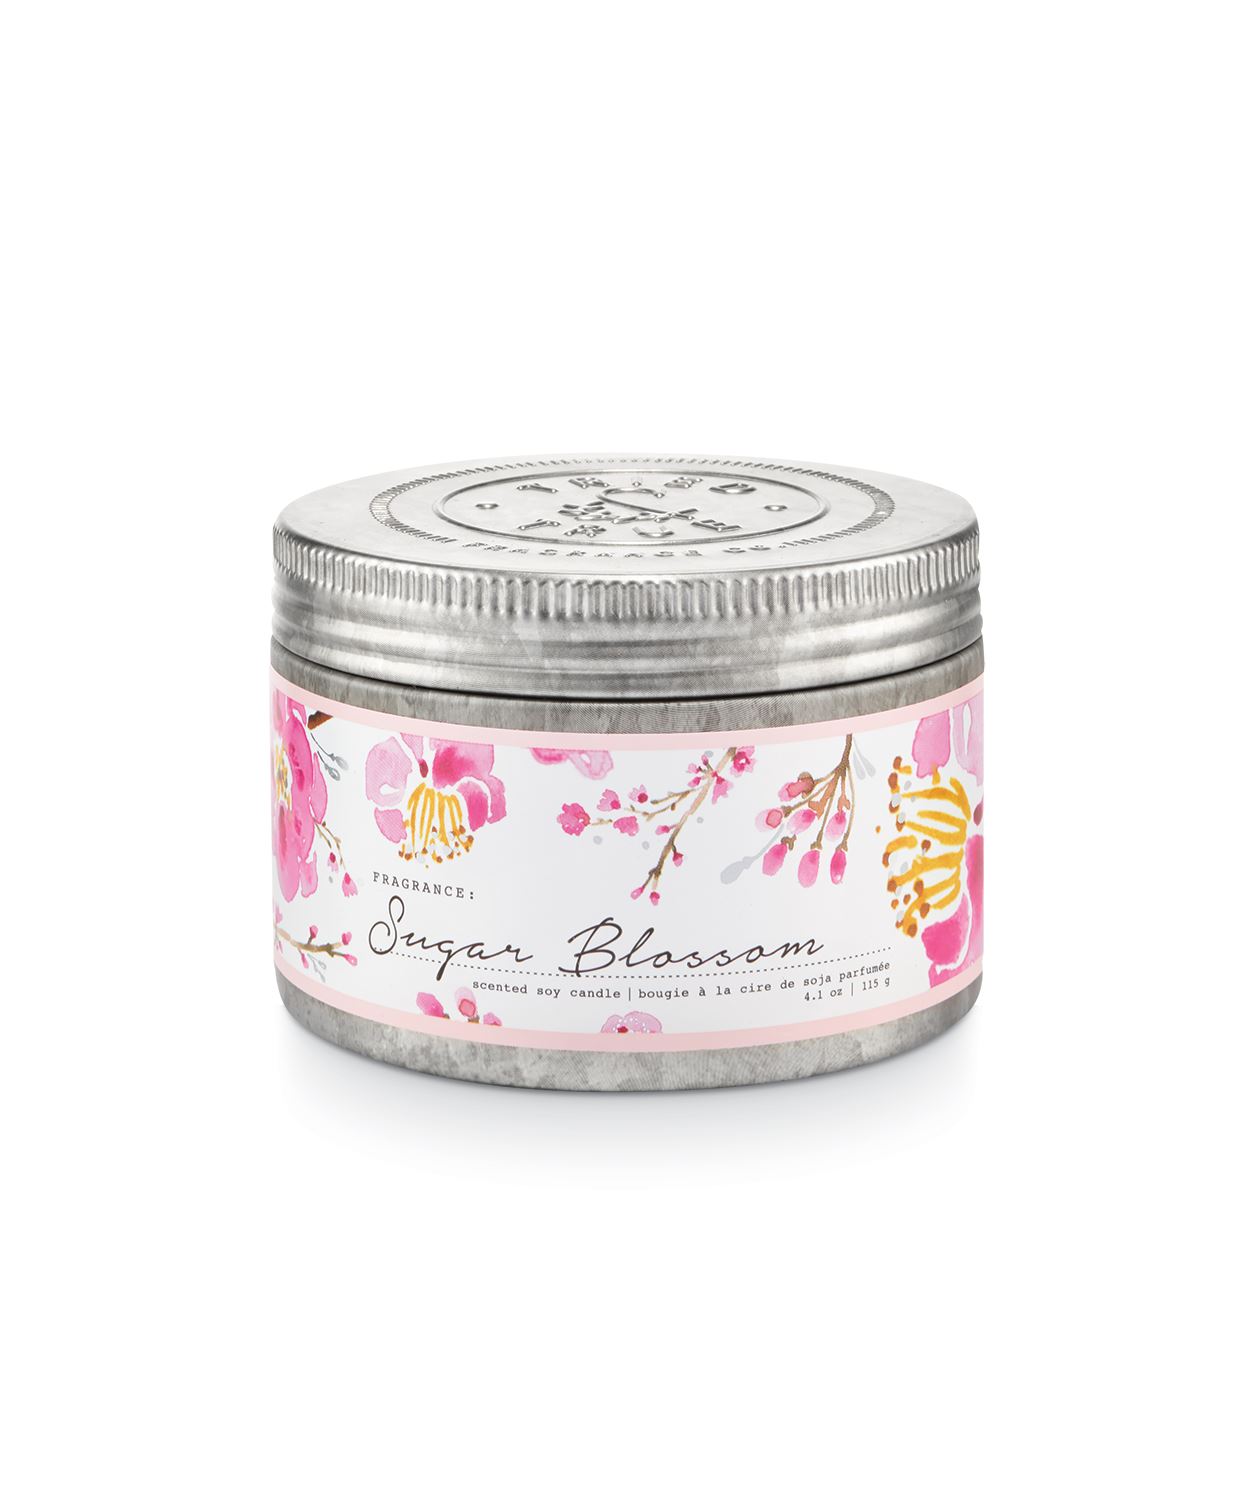 Tried & True Small Tin Candle: Sugar Blossom